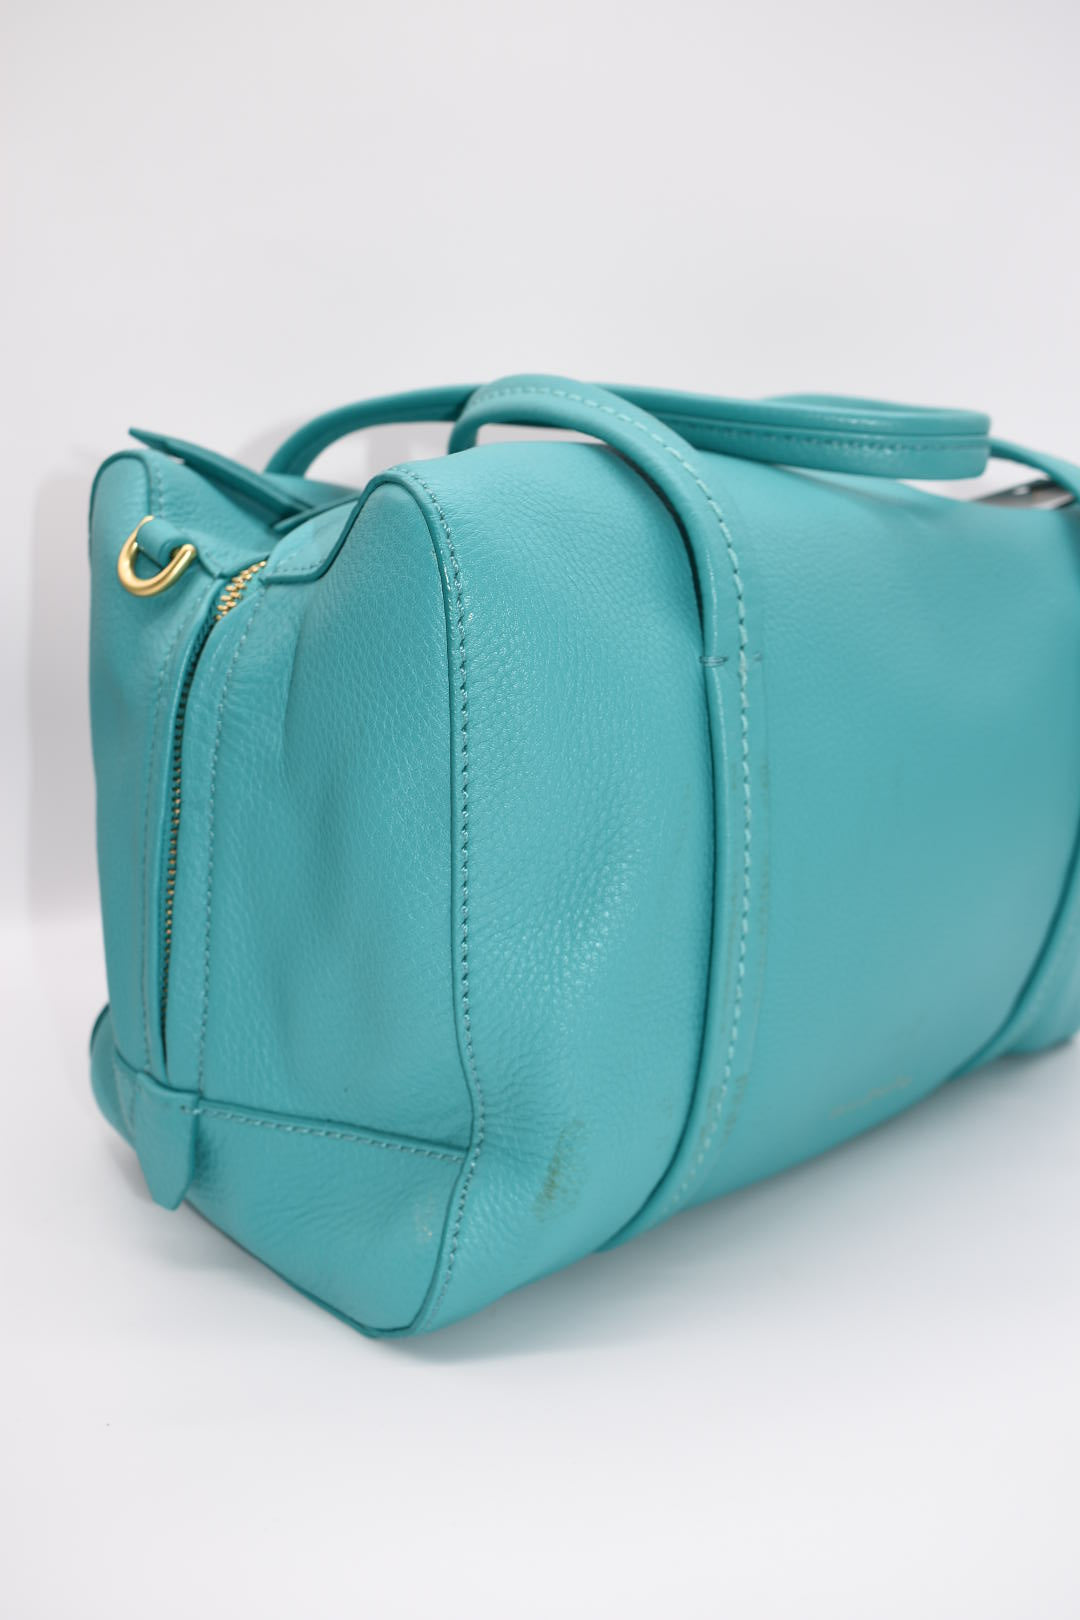 Vera Bradley Mallory Leather Satchel Bag in Turquoise Sea